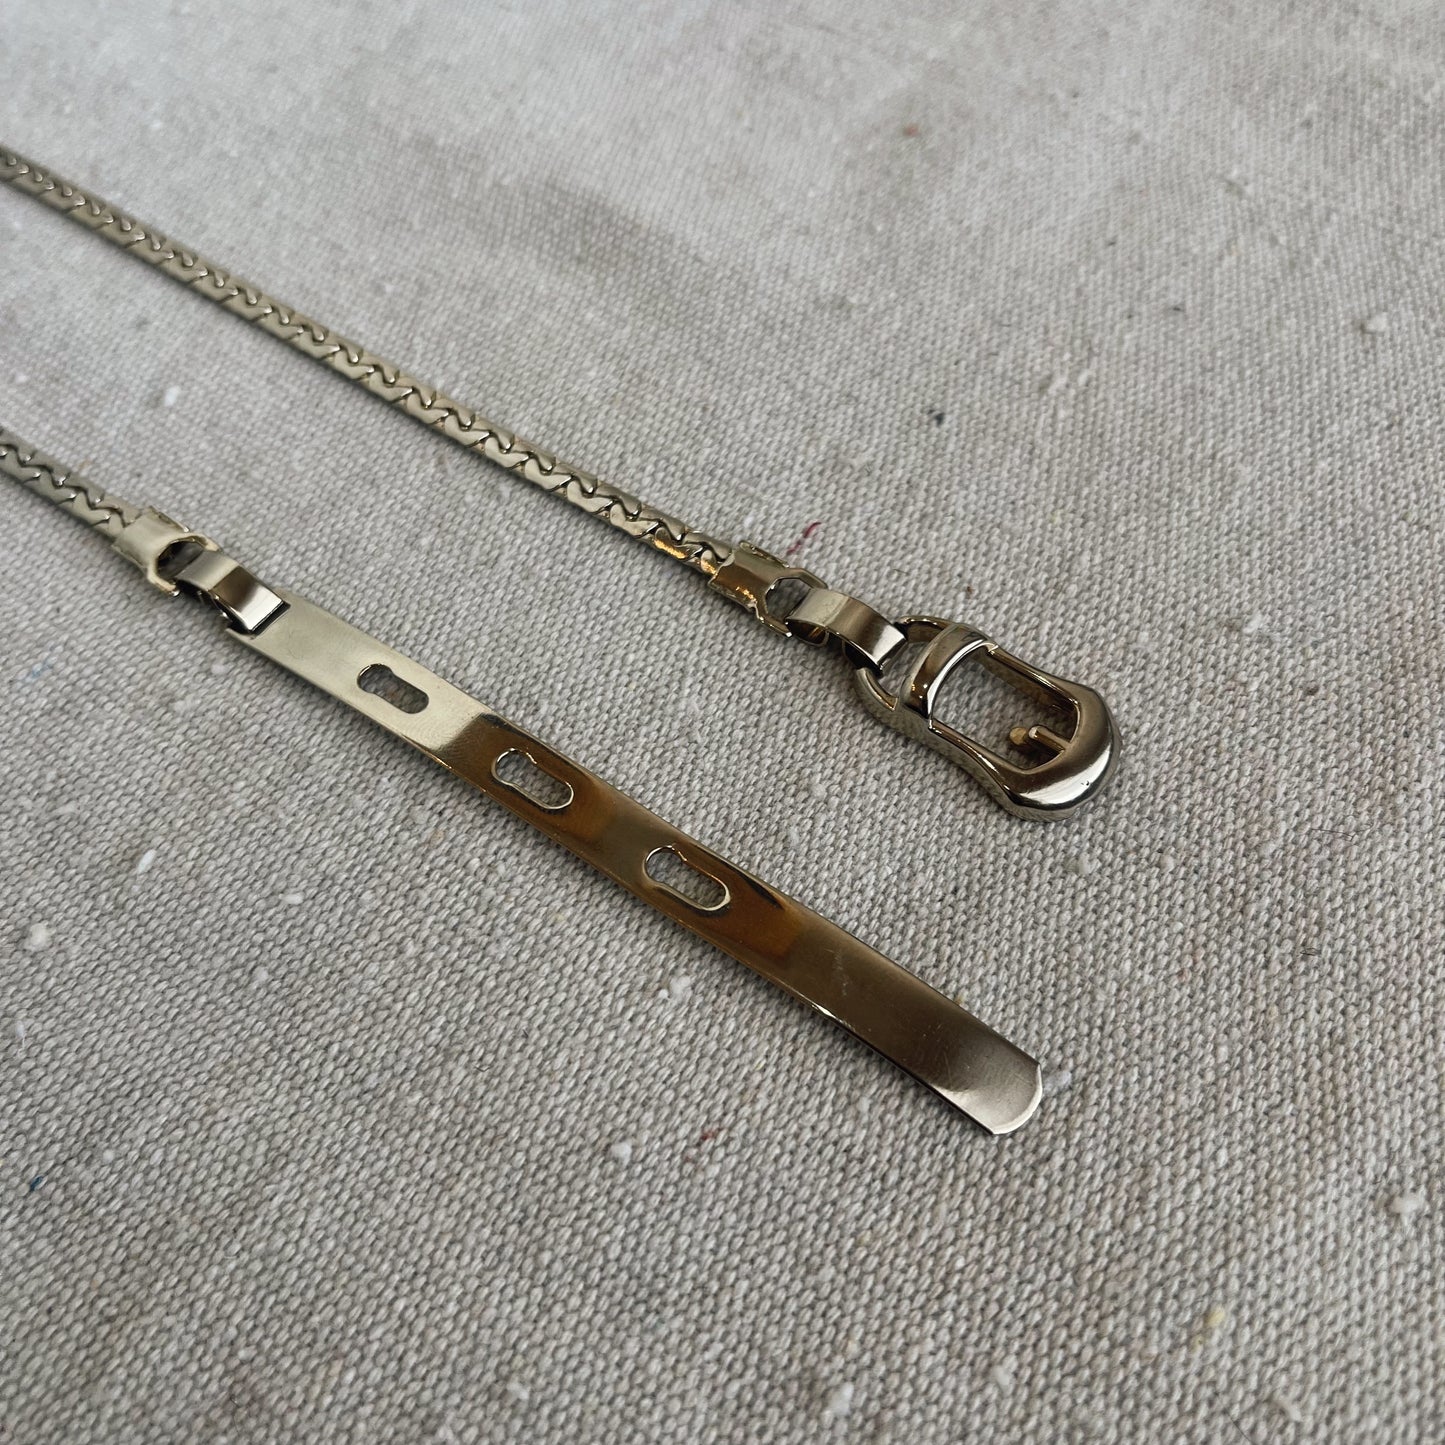 chain belt, silver tone